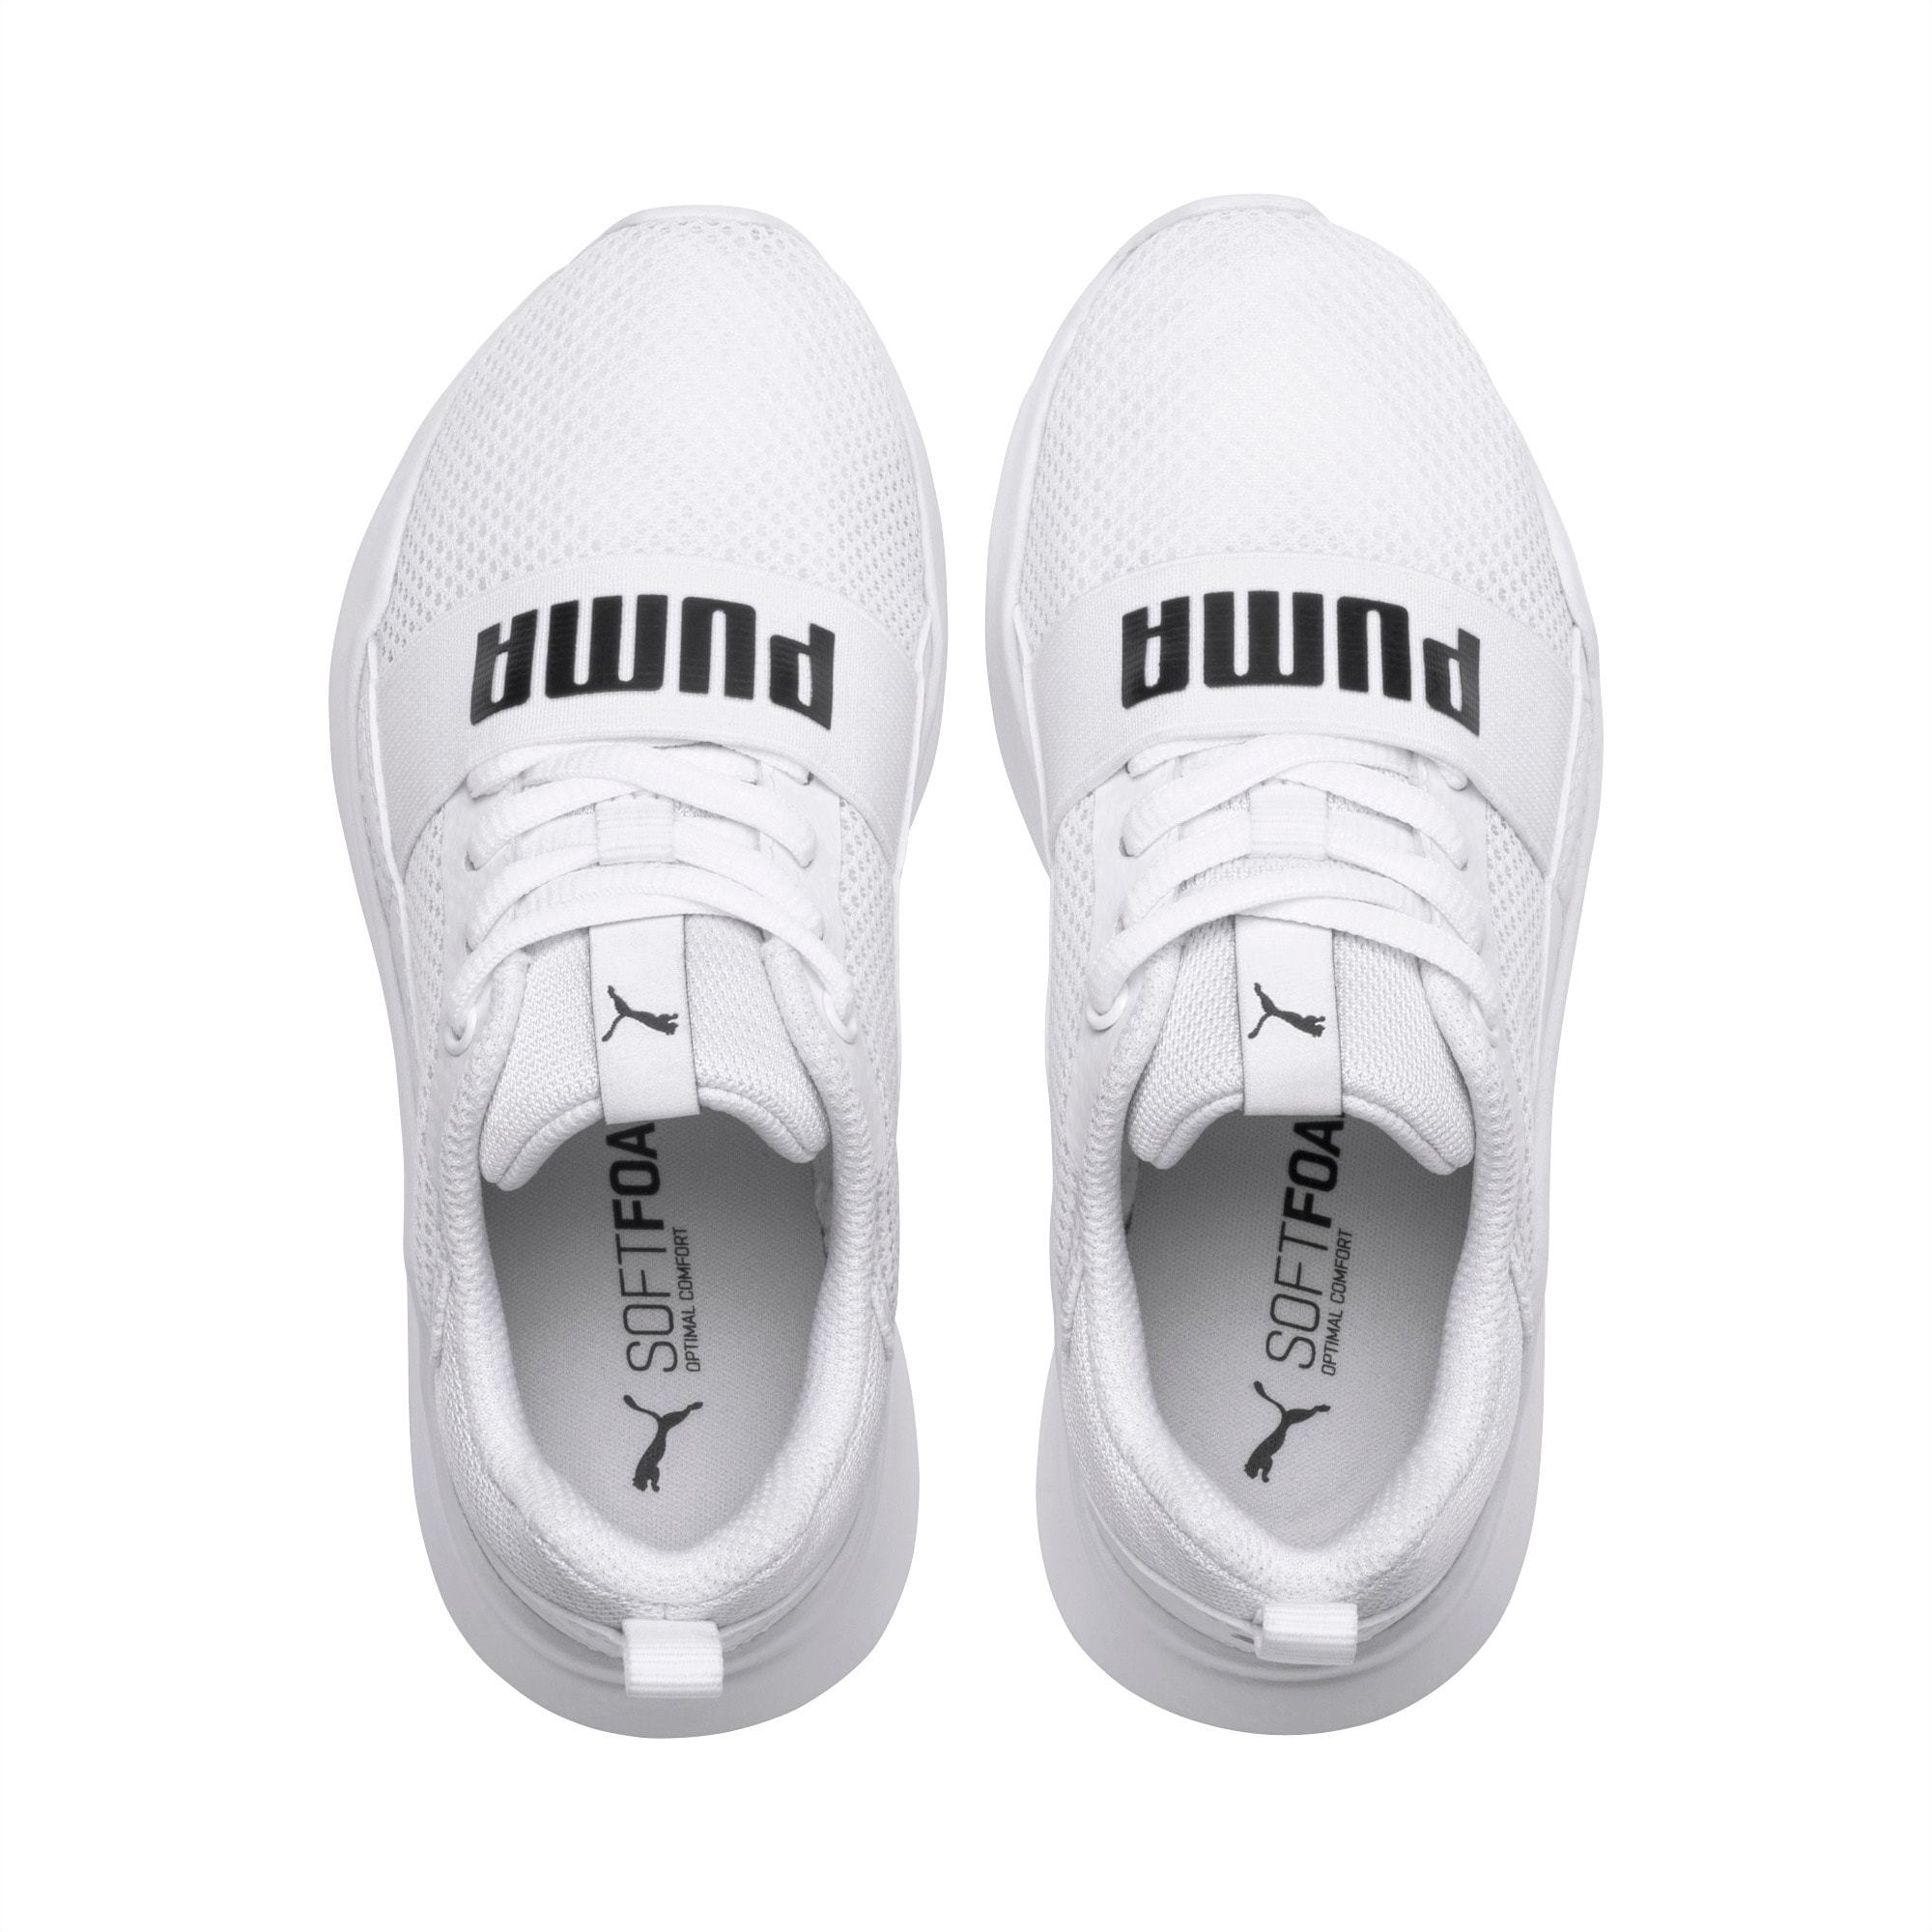 puma soft foam white shoes